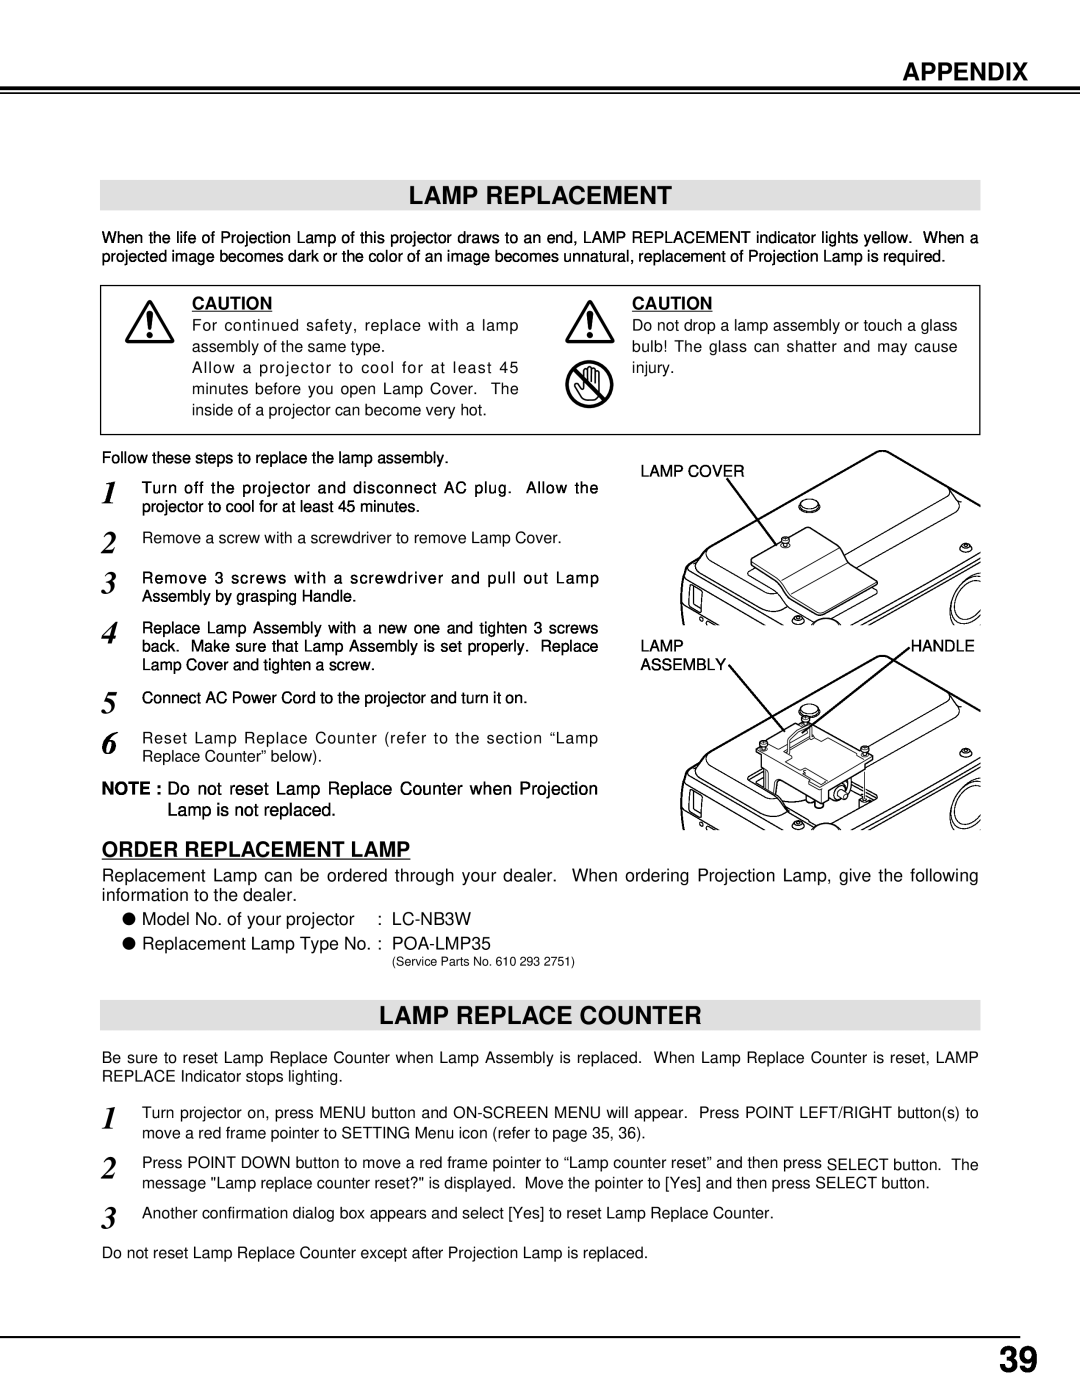 Eiki LC-NB3W owner manual Appendix Lamp Replacement, Lamp Replace Counter, Order Replacement Lamp 